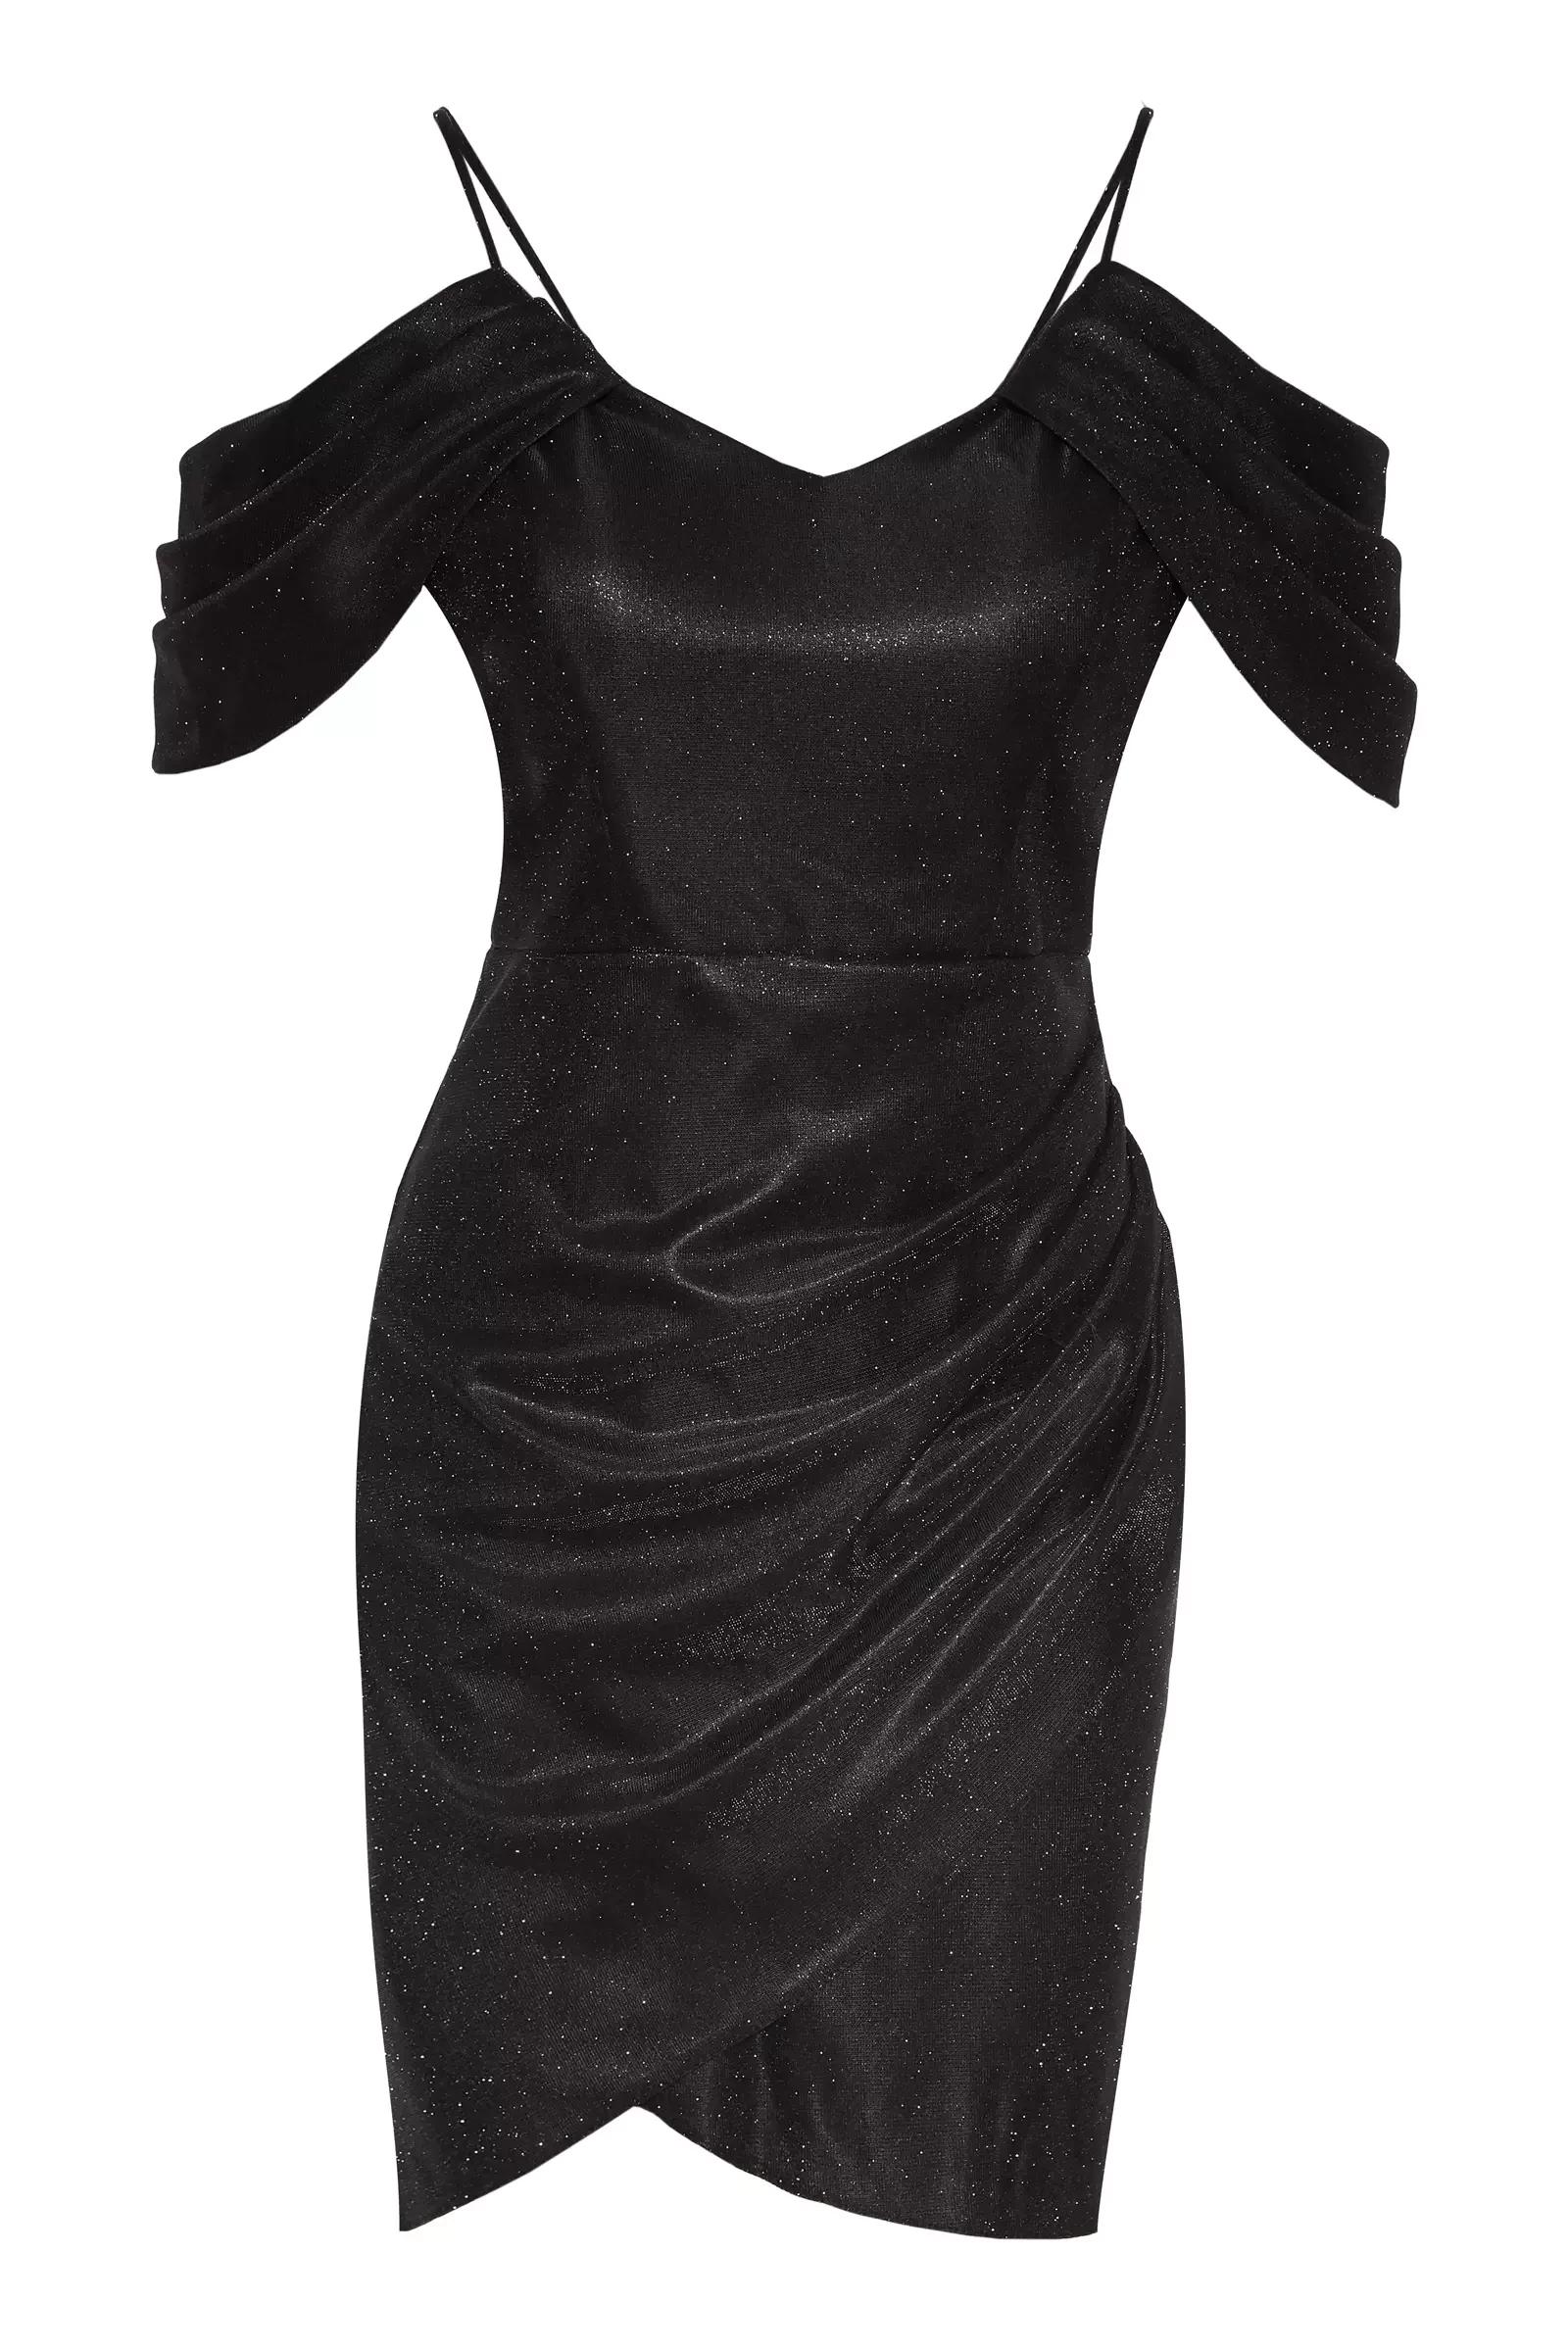 Black glare sleeveless mini dress